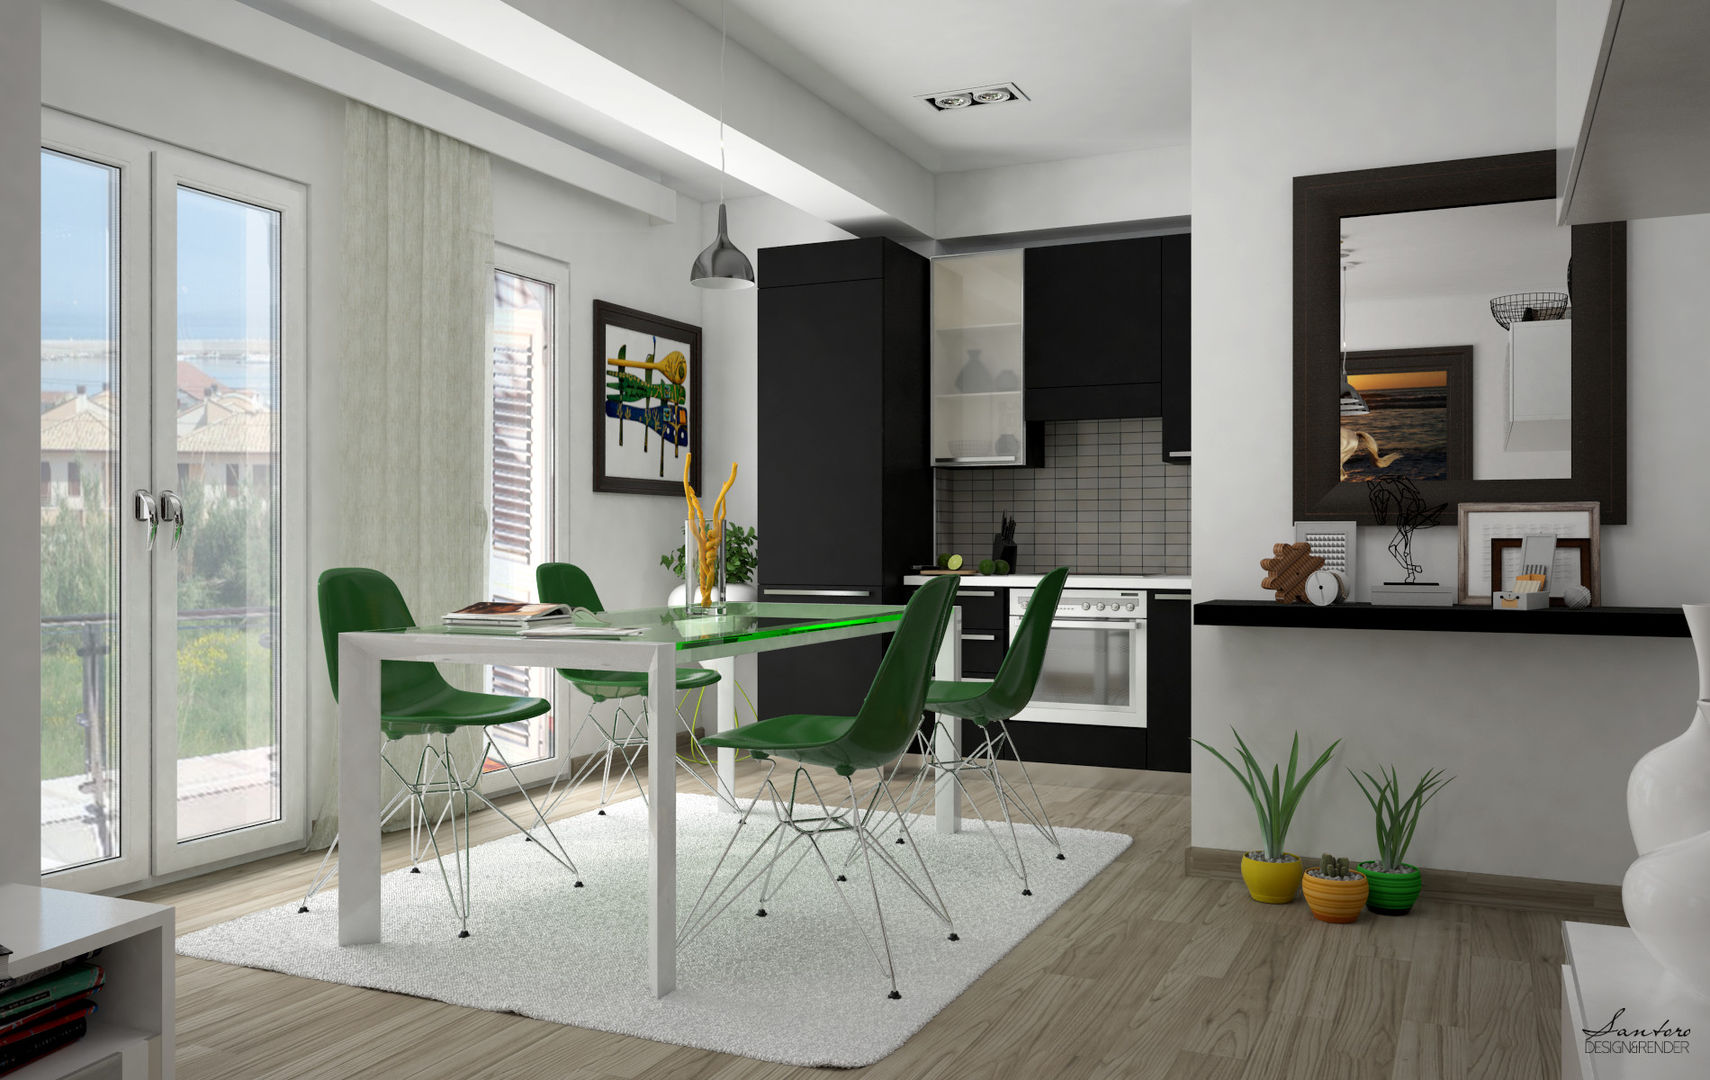 Design & Render livingroom – arredamento S.Agata Militello (ME) , Santoro Design Render Santoro Design Render Dapur Modern